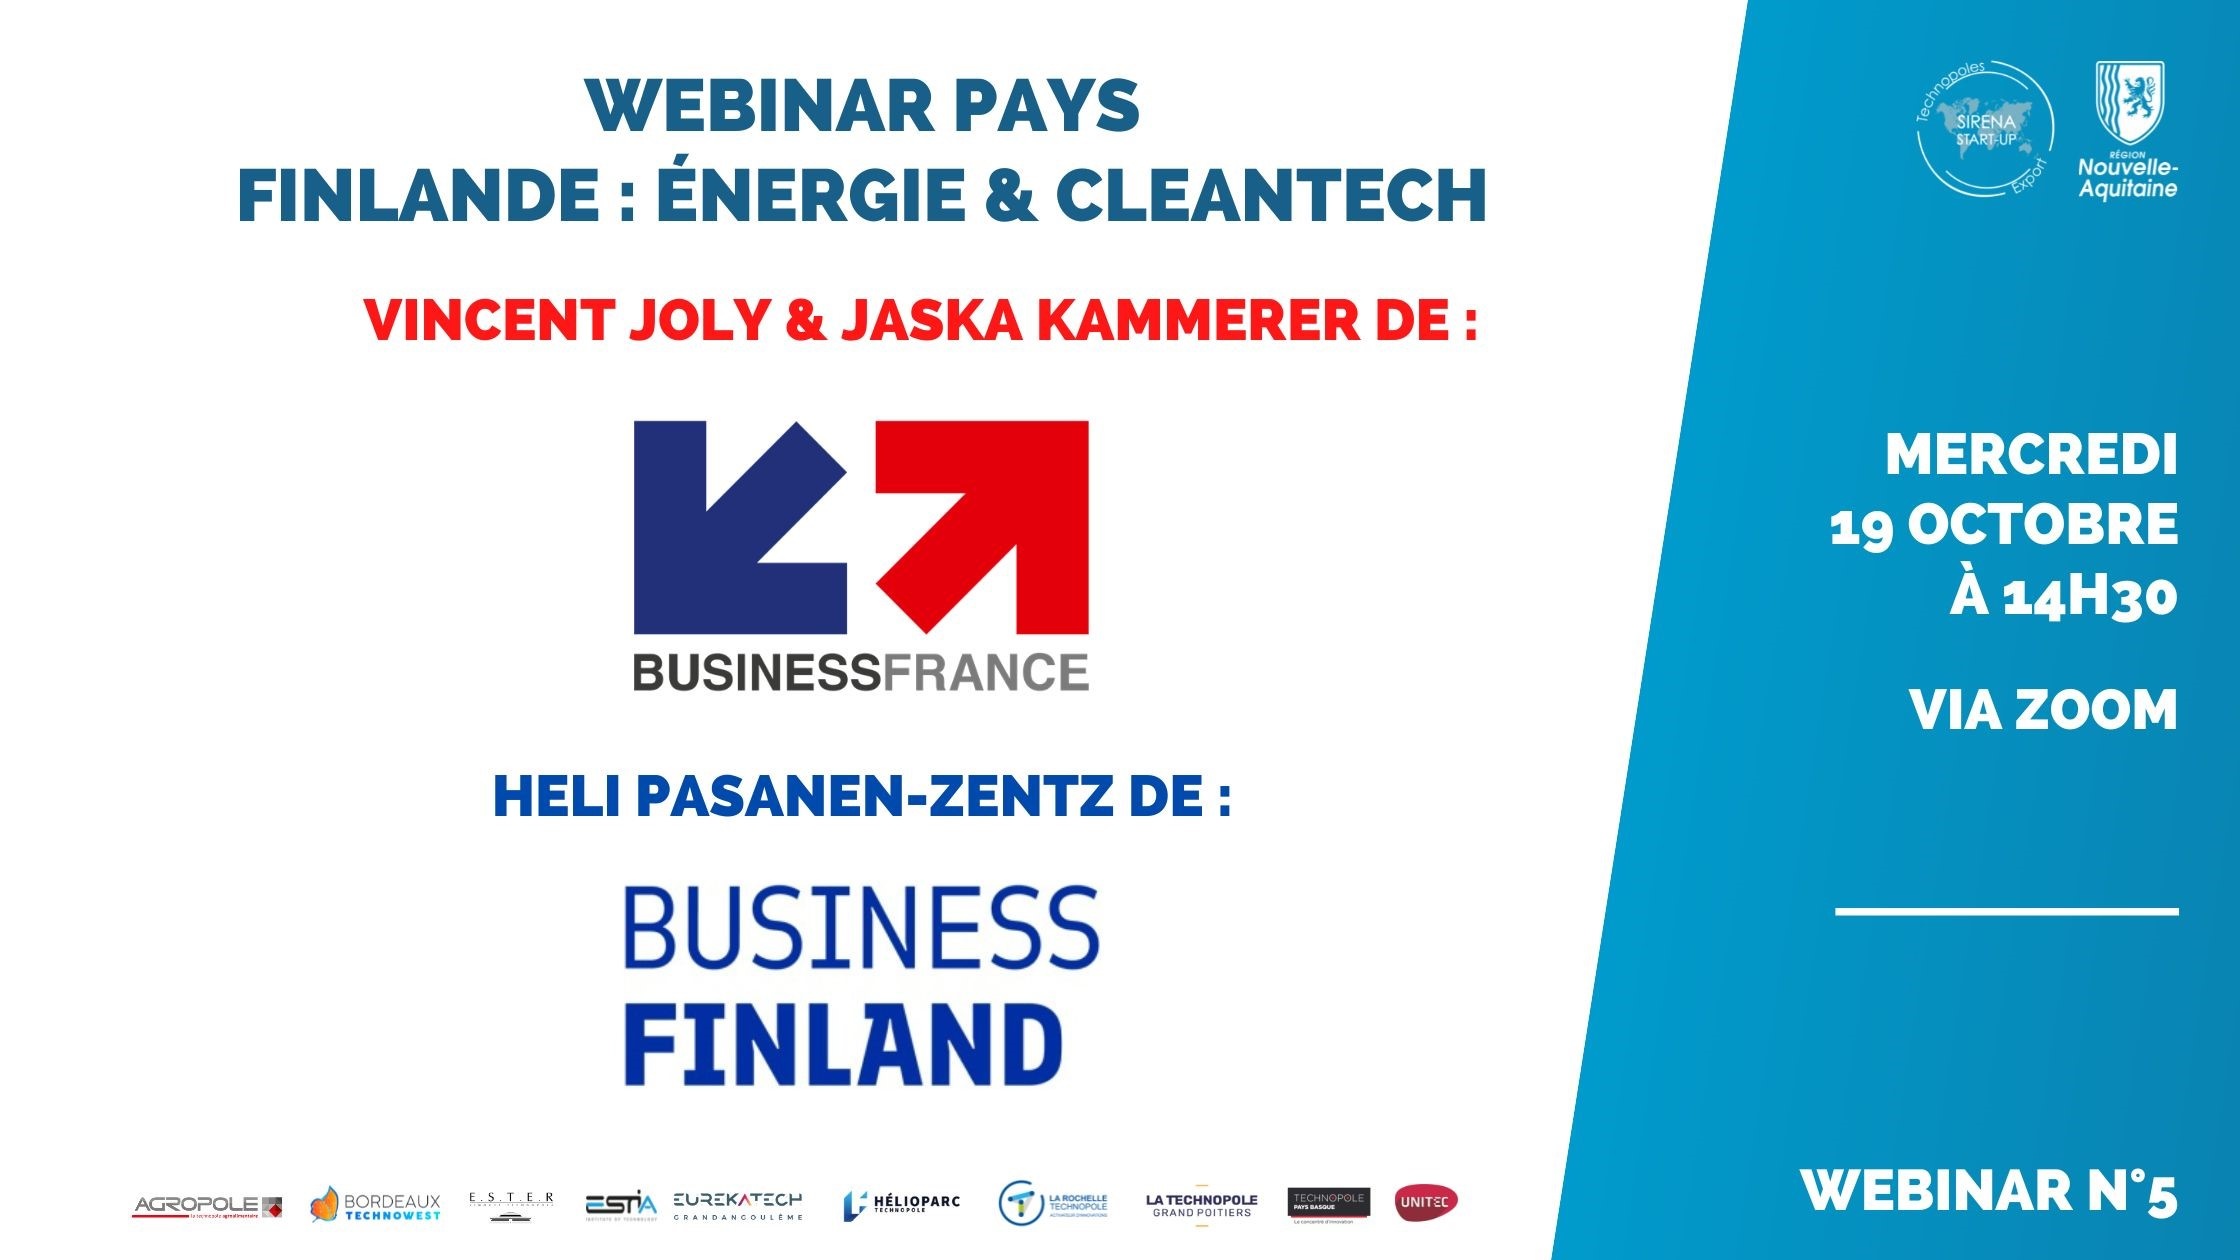 Webinaire pays Sirena start-up : Finlande ENERGIE & CLEANTECH